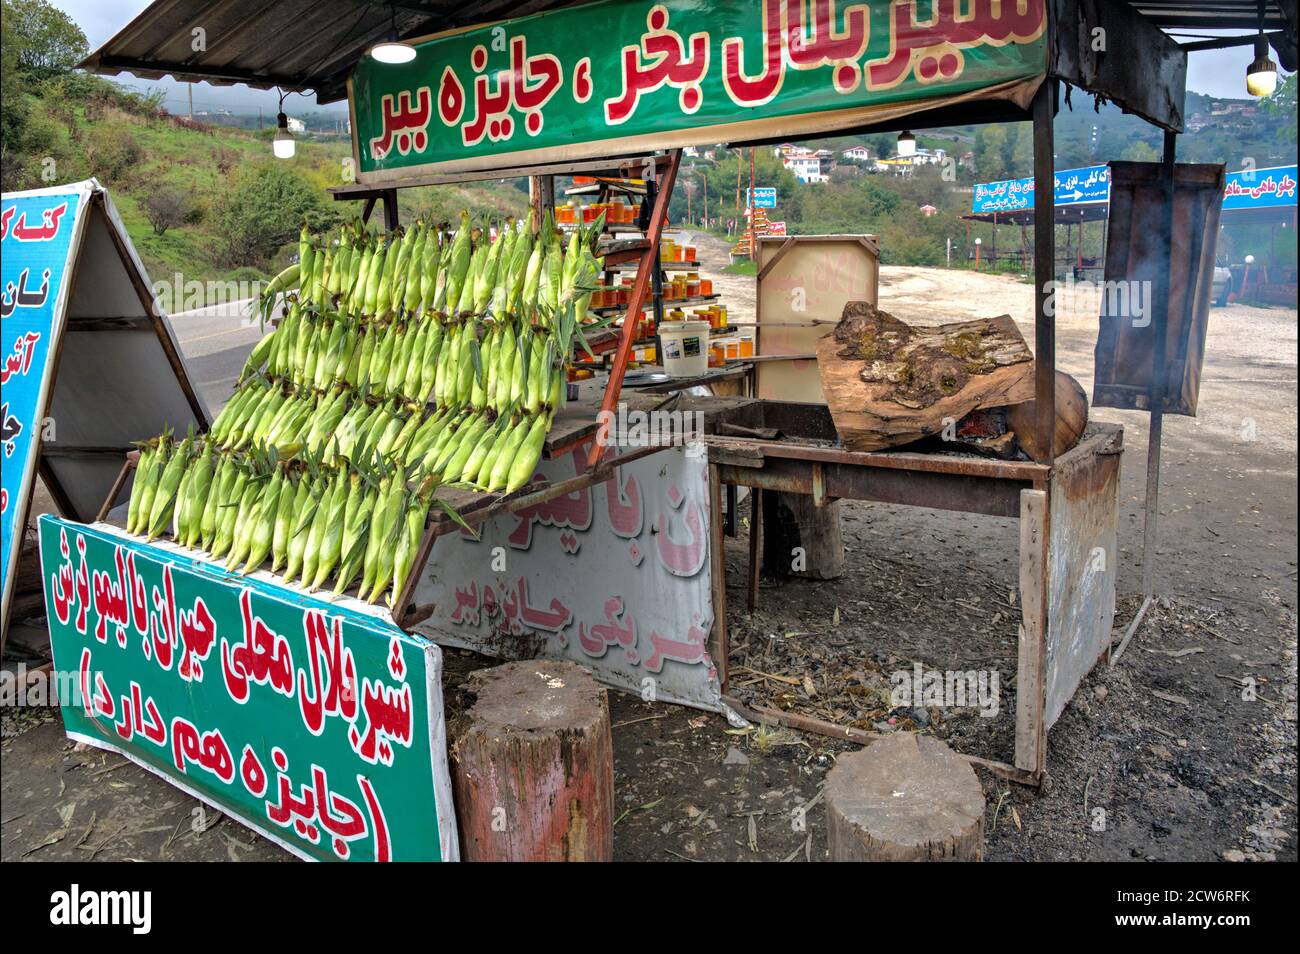 Street food stall at the Iran - Azerbaijan border in the road between Astara and Ardabil, Iran Stock Photo